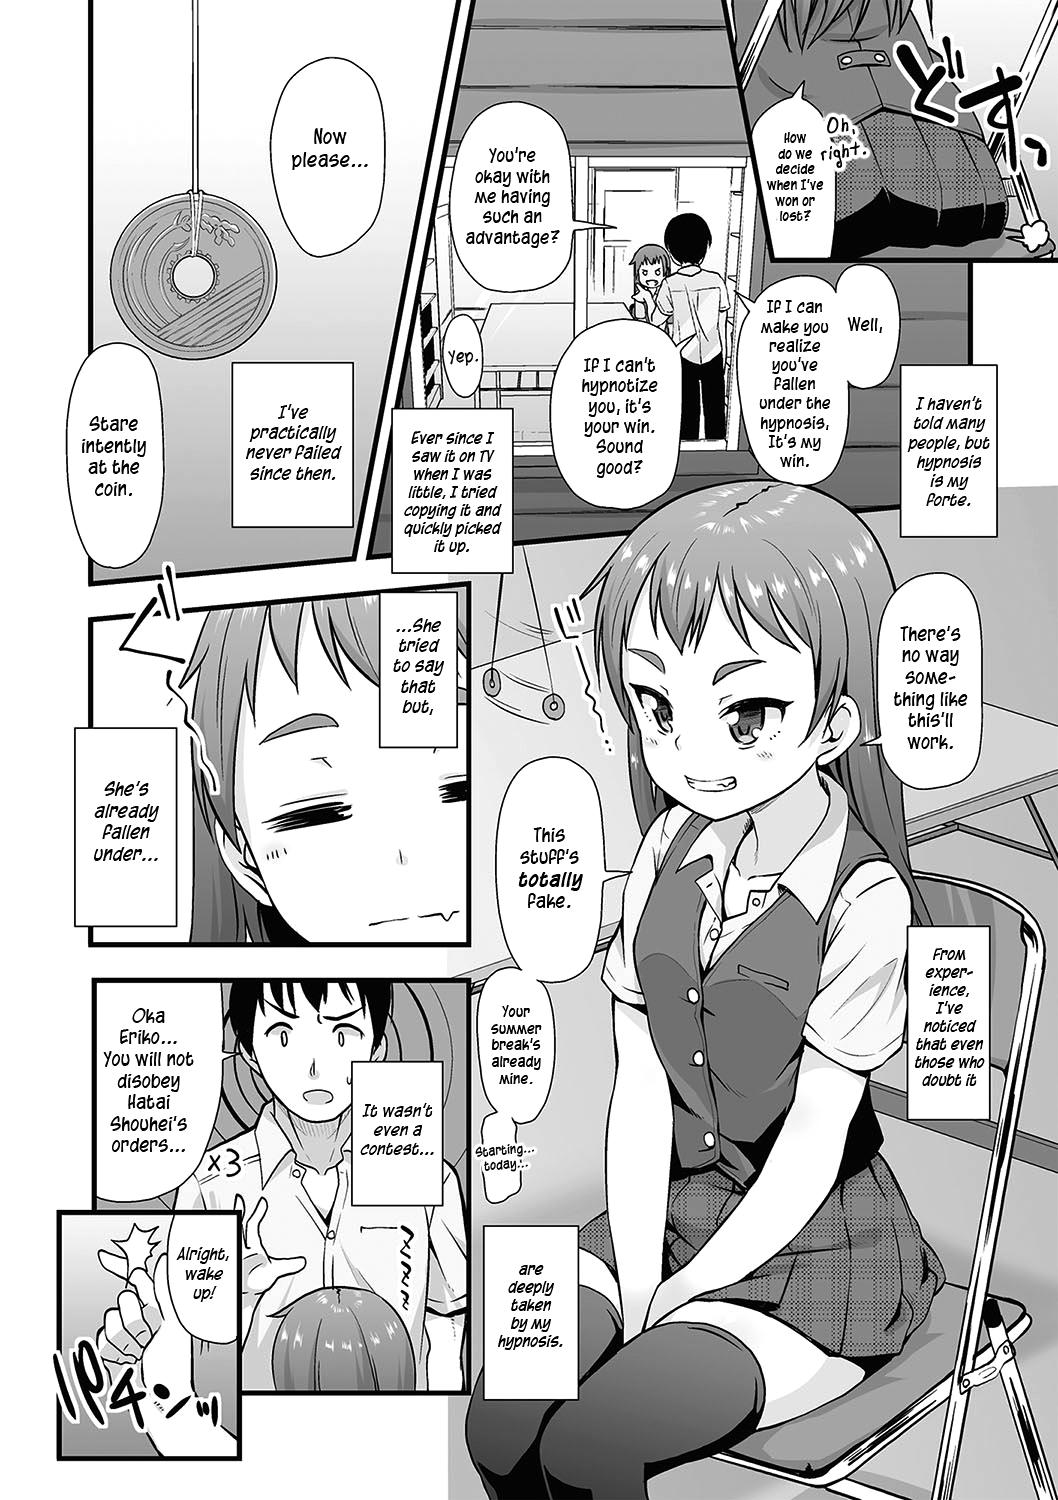 Manga Club Activity Log 4